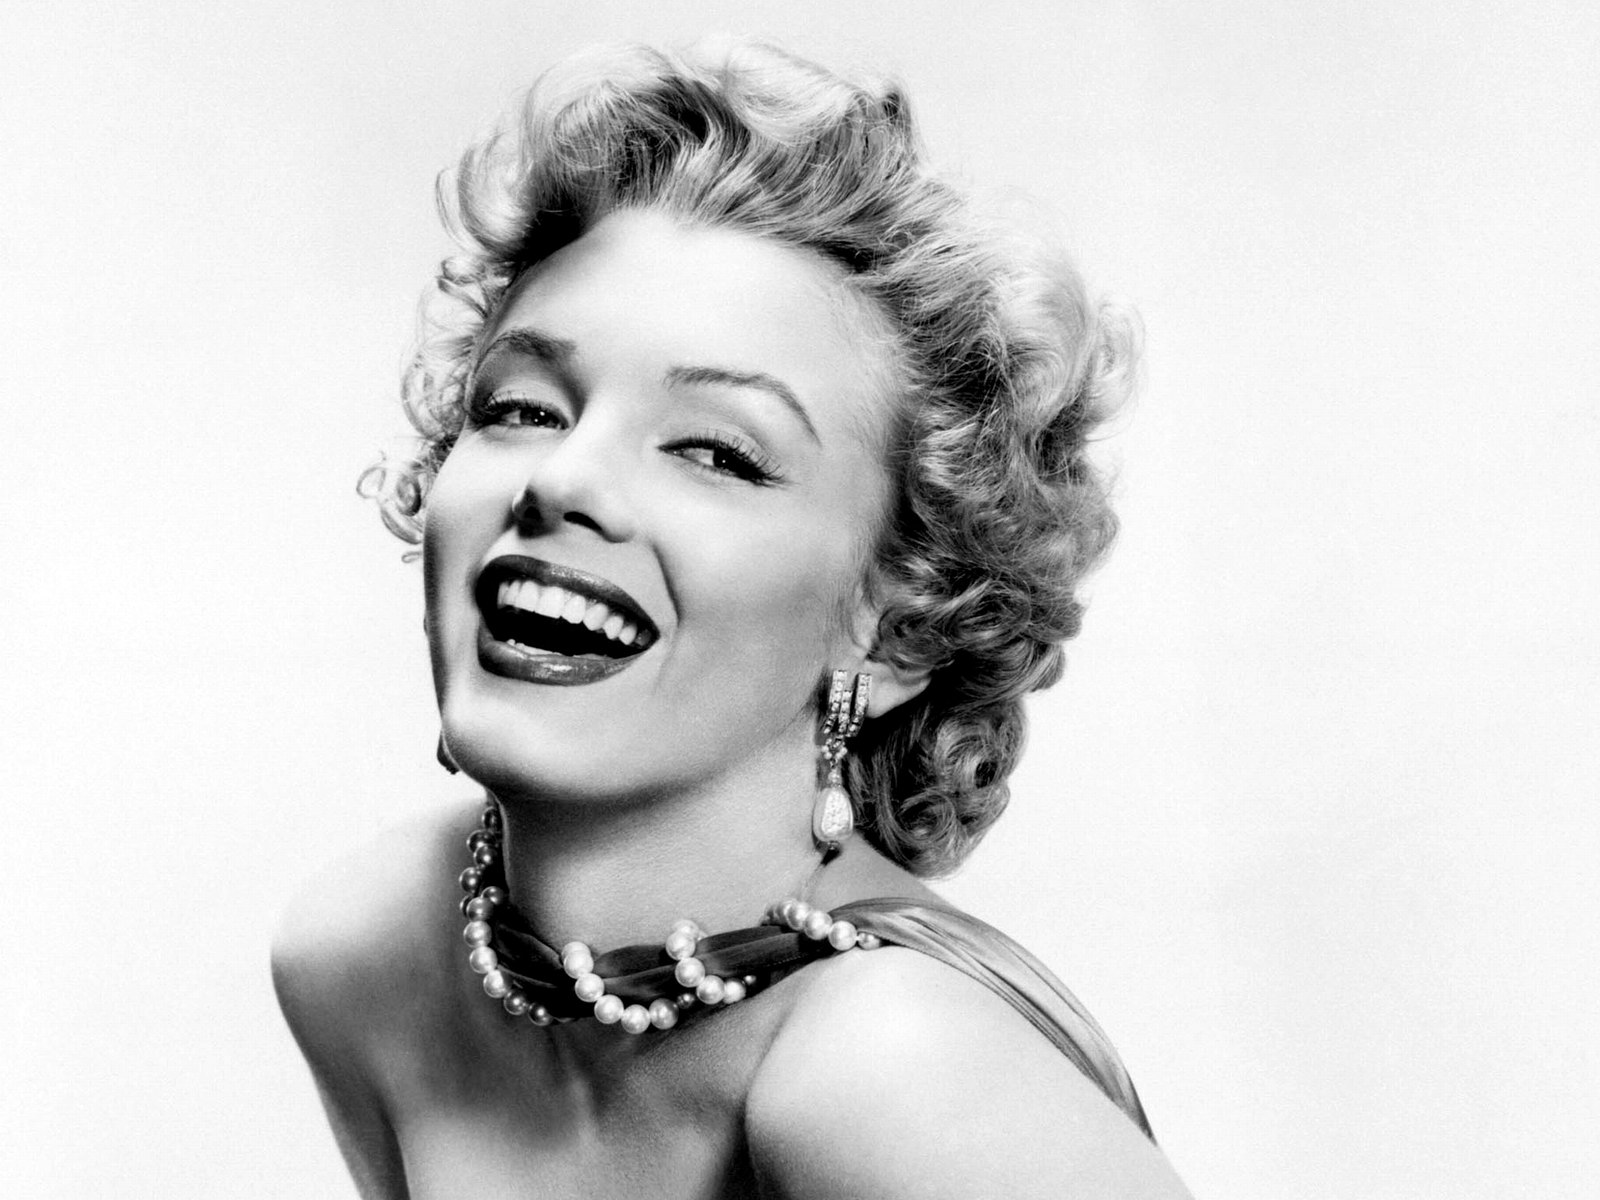 http://2.bp.blogspot.com/-TBXS_PzAp1k/T8WOk_PMs3I/AAAAAAAAQvs/iyrxVlF4hPc/s1600/Marilyn-Monroe-New-2012-Black-and-White-Wallpapers3.jpg